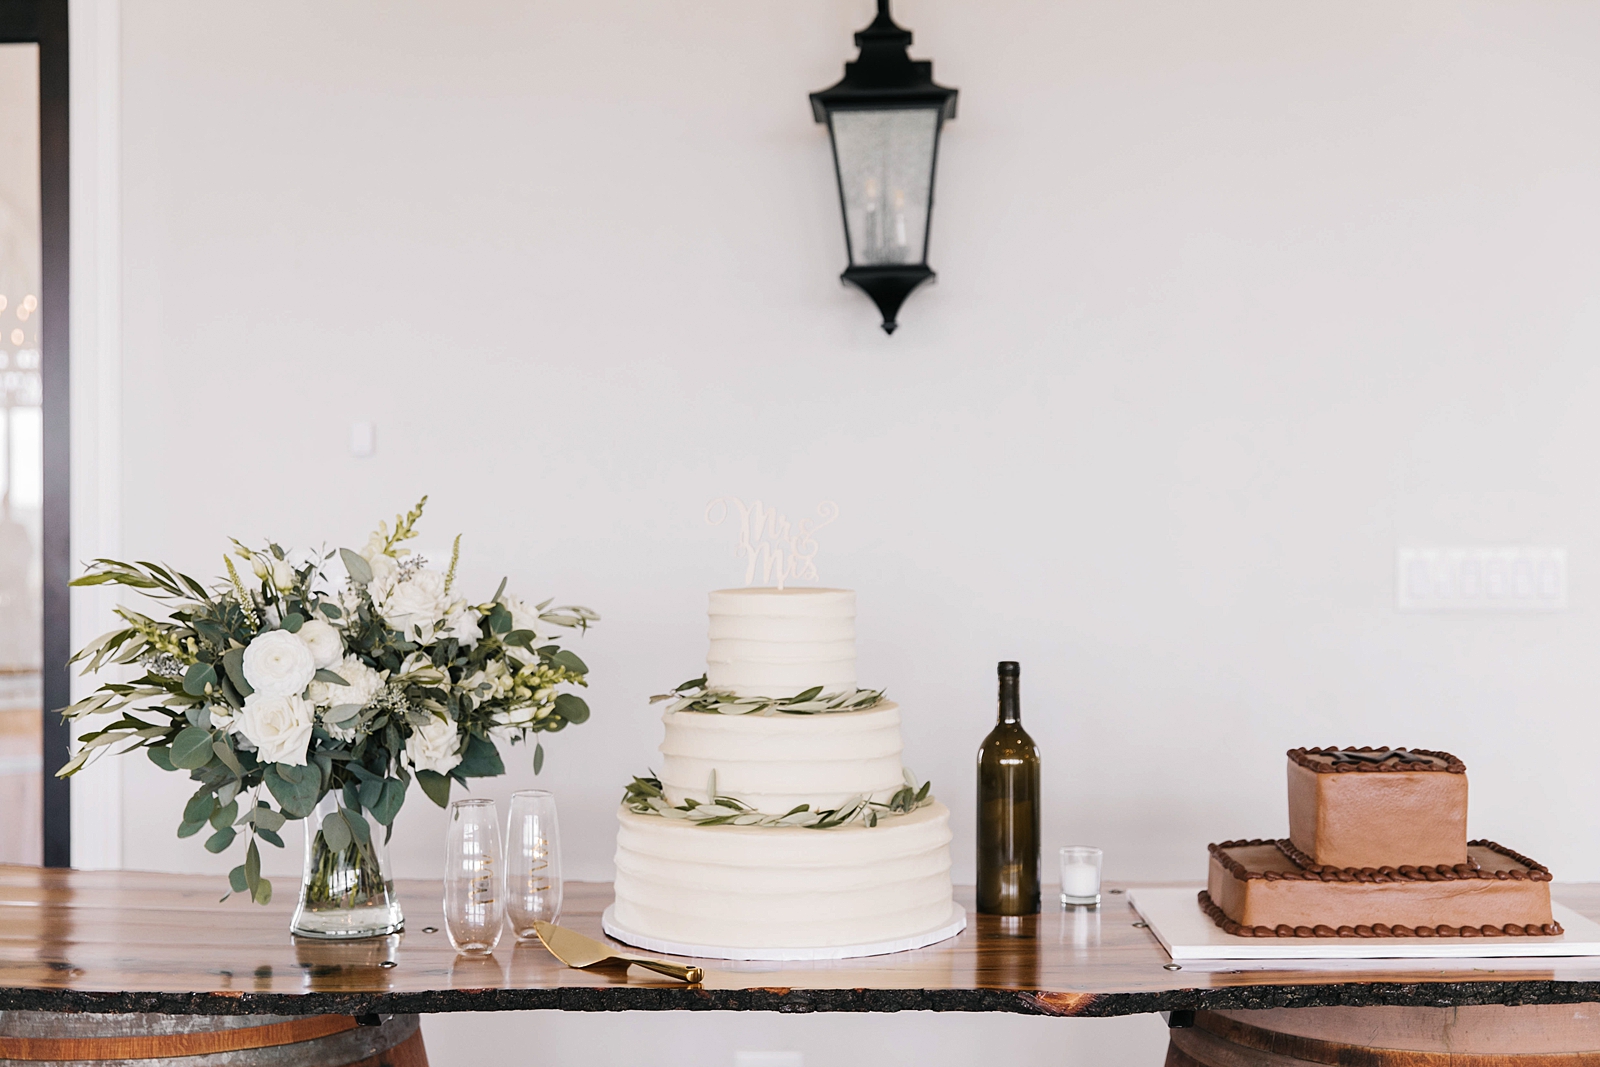  Dove Ridge Vineyard wedding cake